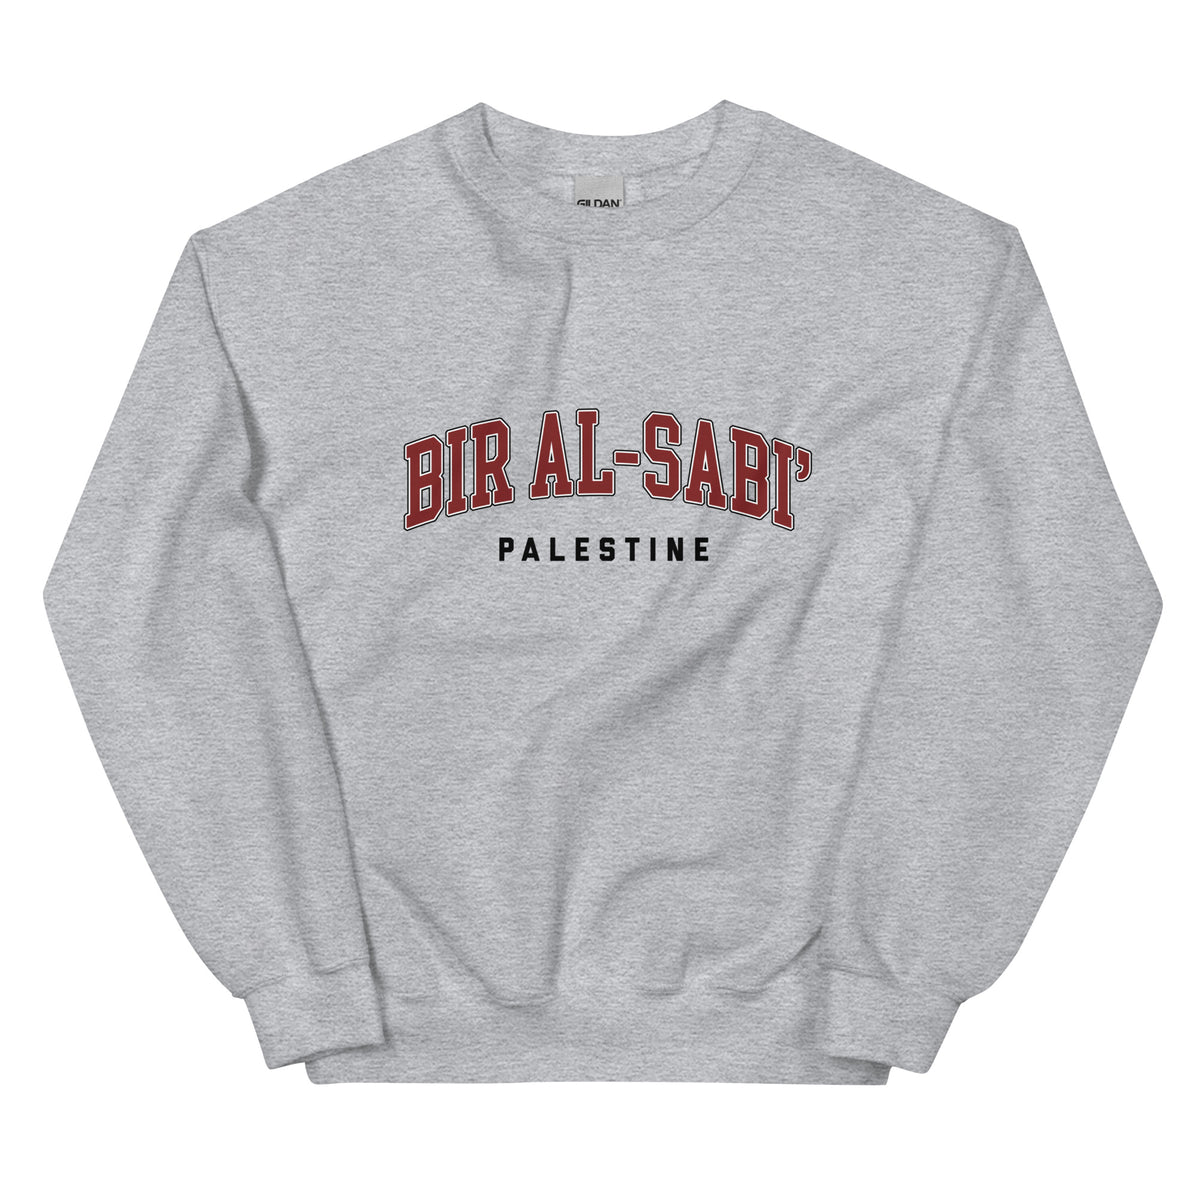 Bir Al-Sabi', Palestine - Sweatshirt